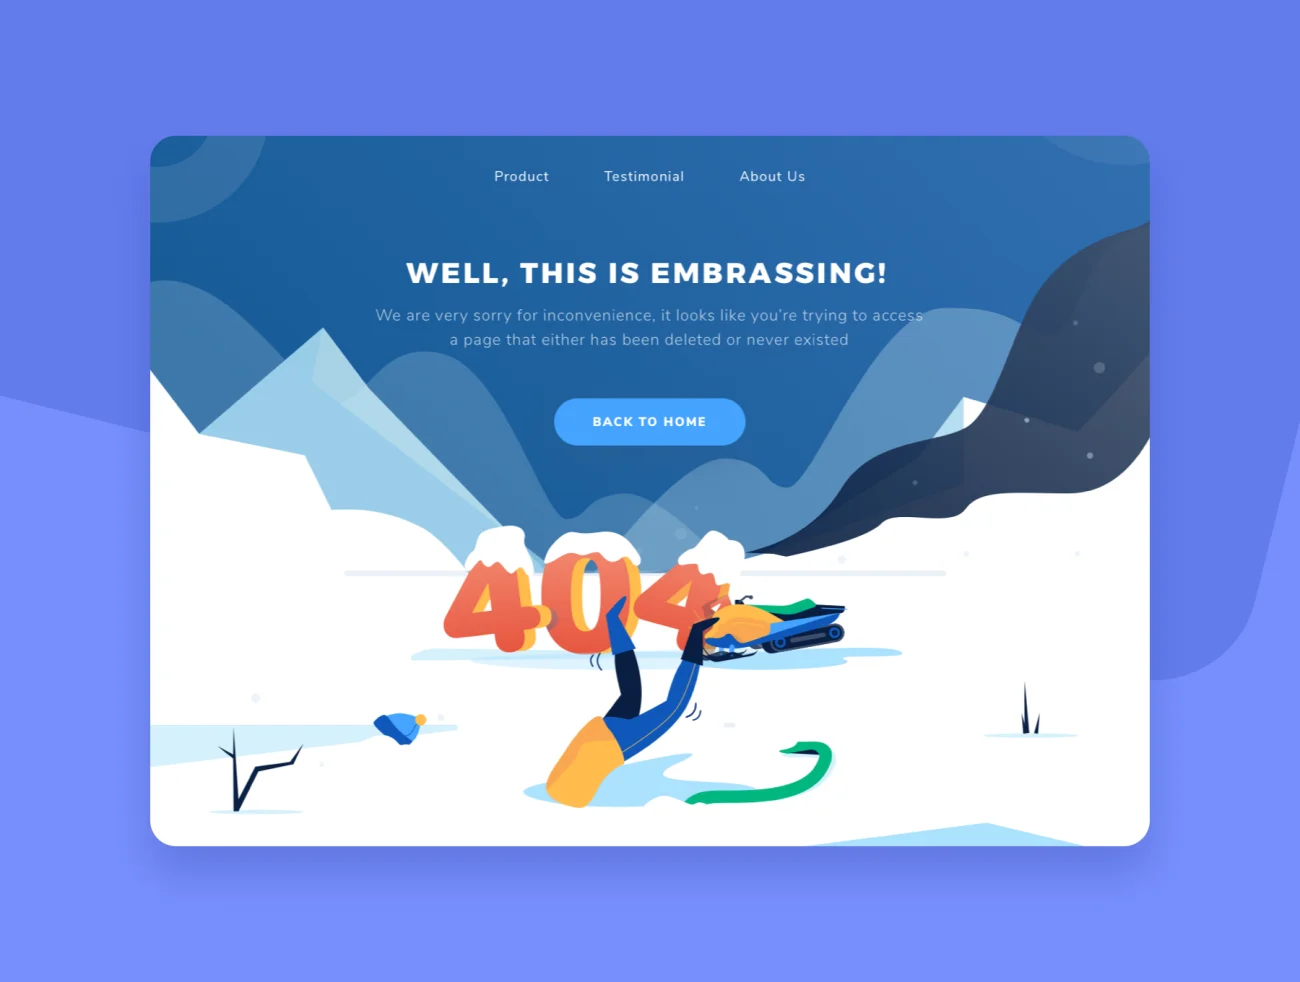 Salju 404 illustration Vol 1 状态页错误页404矢量插图合集-人物插画、场景插画、插画、状态页-到位啦UI